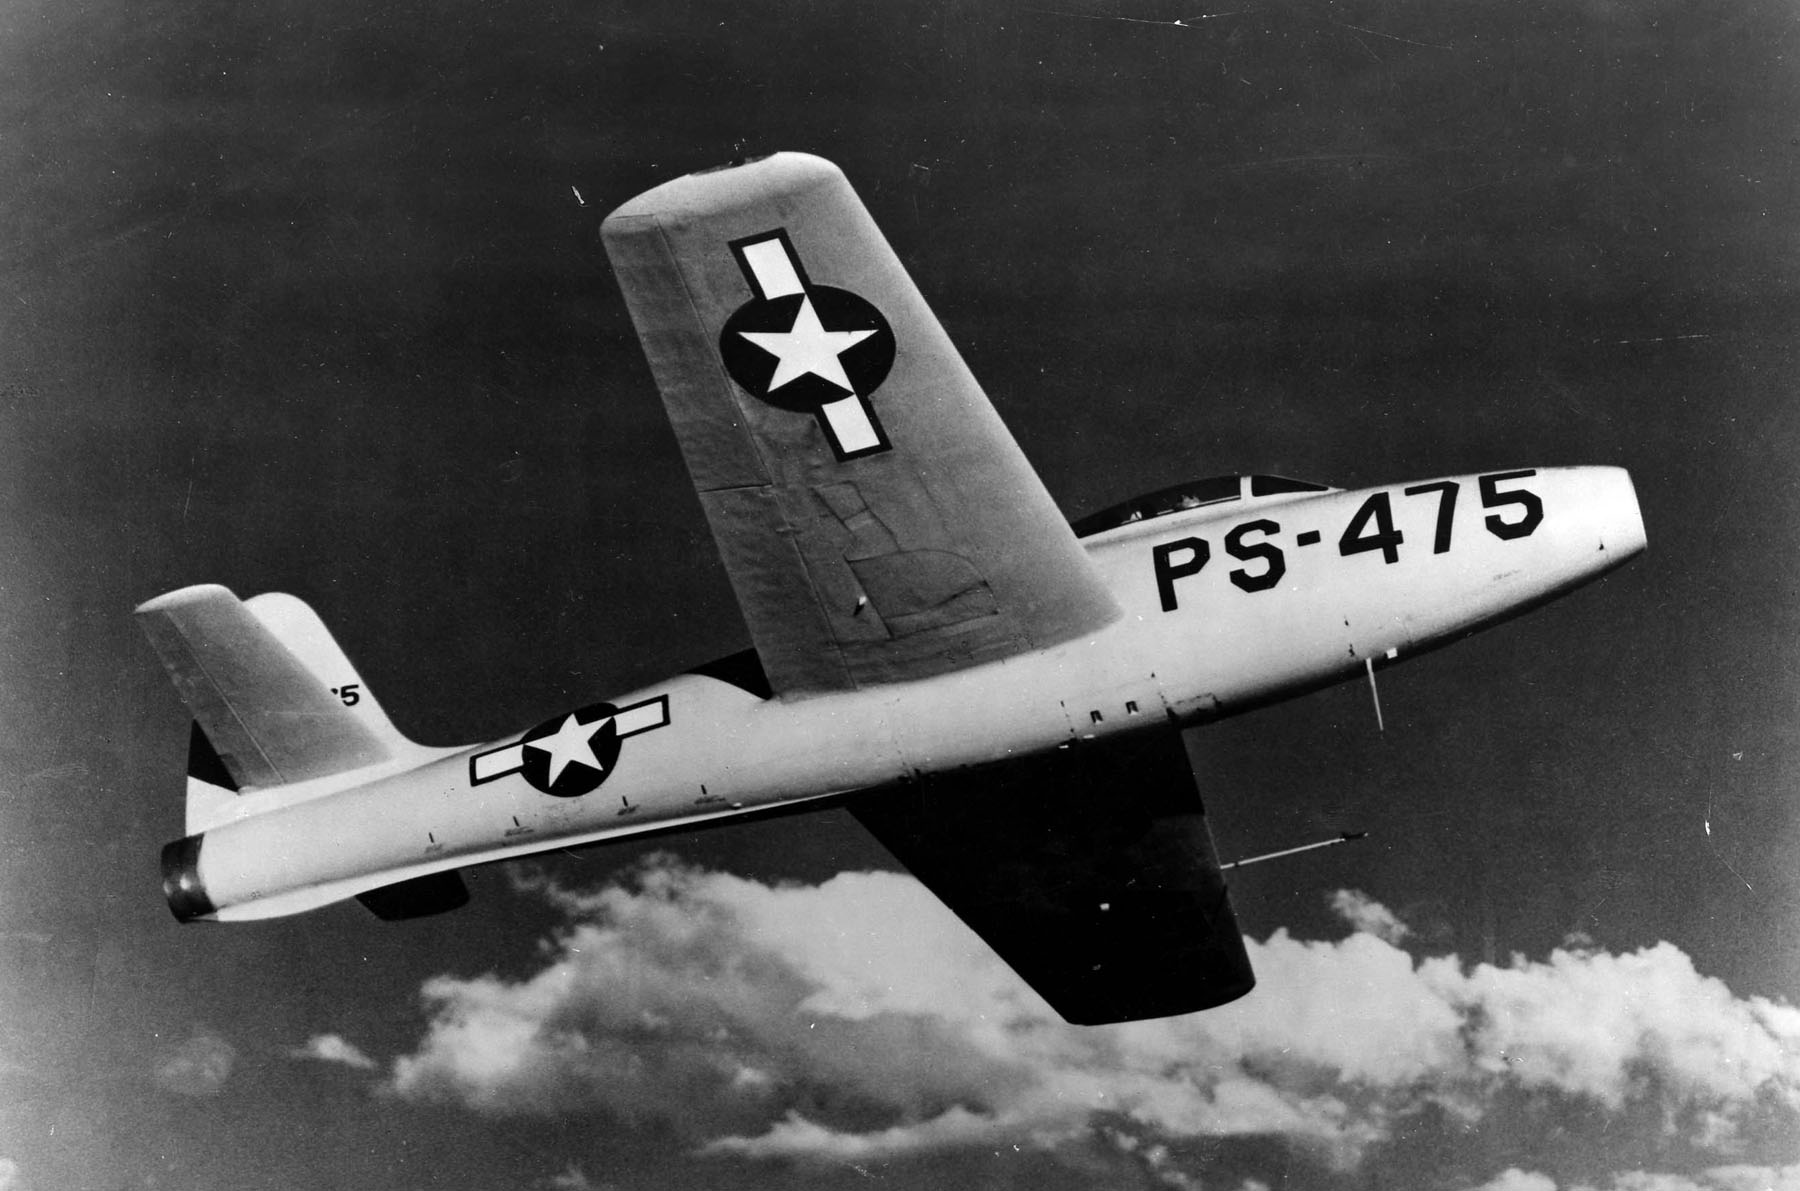 Republic XP-84 Thunderjet 45-59475 in flight. (U.S. Air Force)